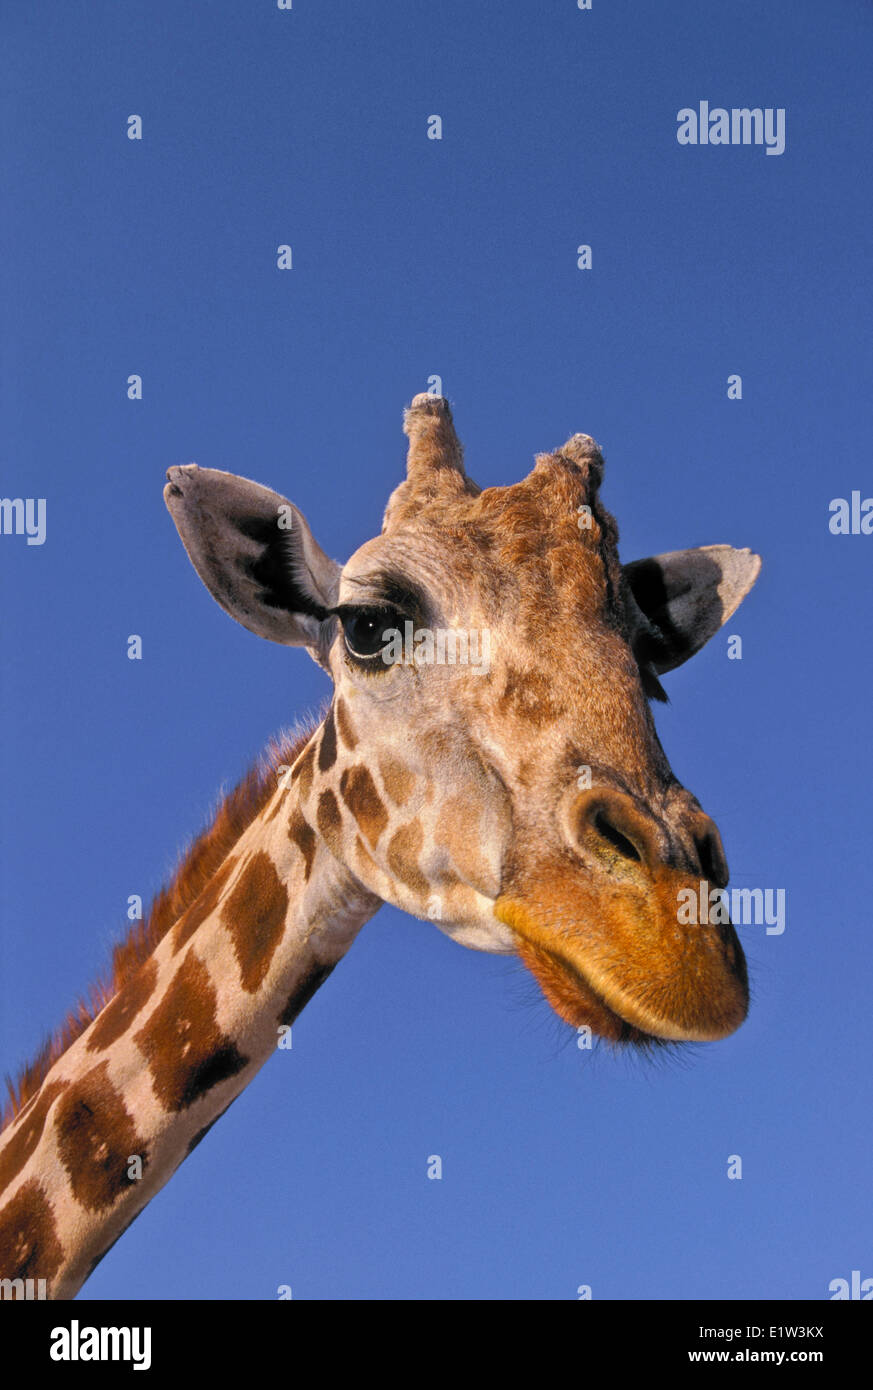 Masai Giraffe (Giraffa camelopardalis tippelskrichi) found in Kenya and Tanzania. The tallest land mammal in the world. Stock Photo